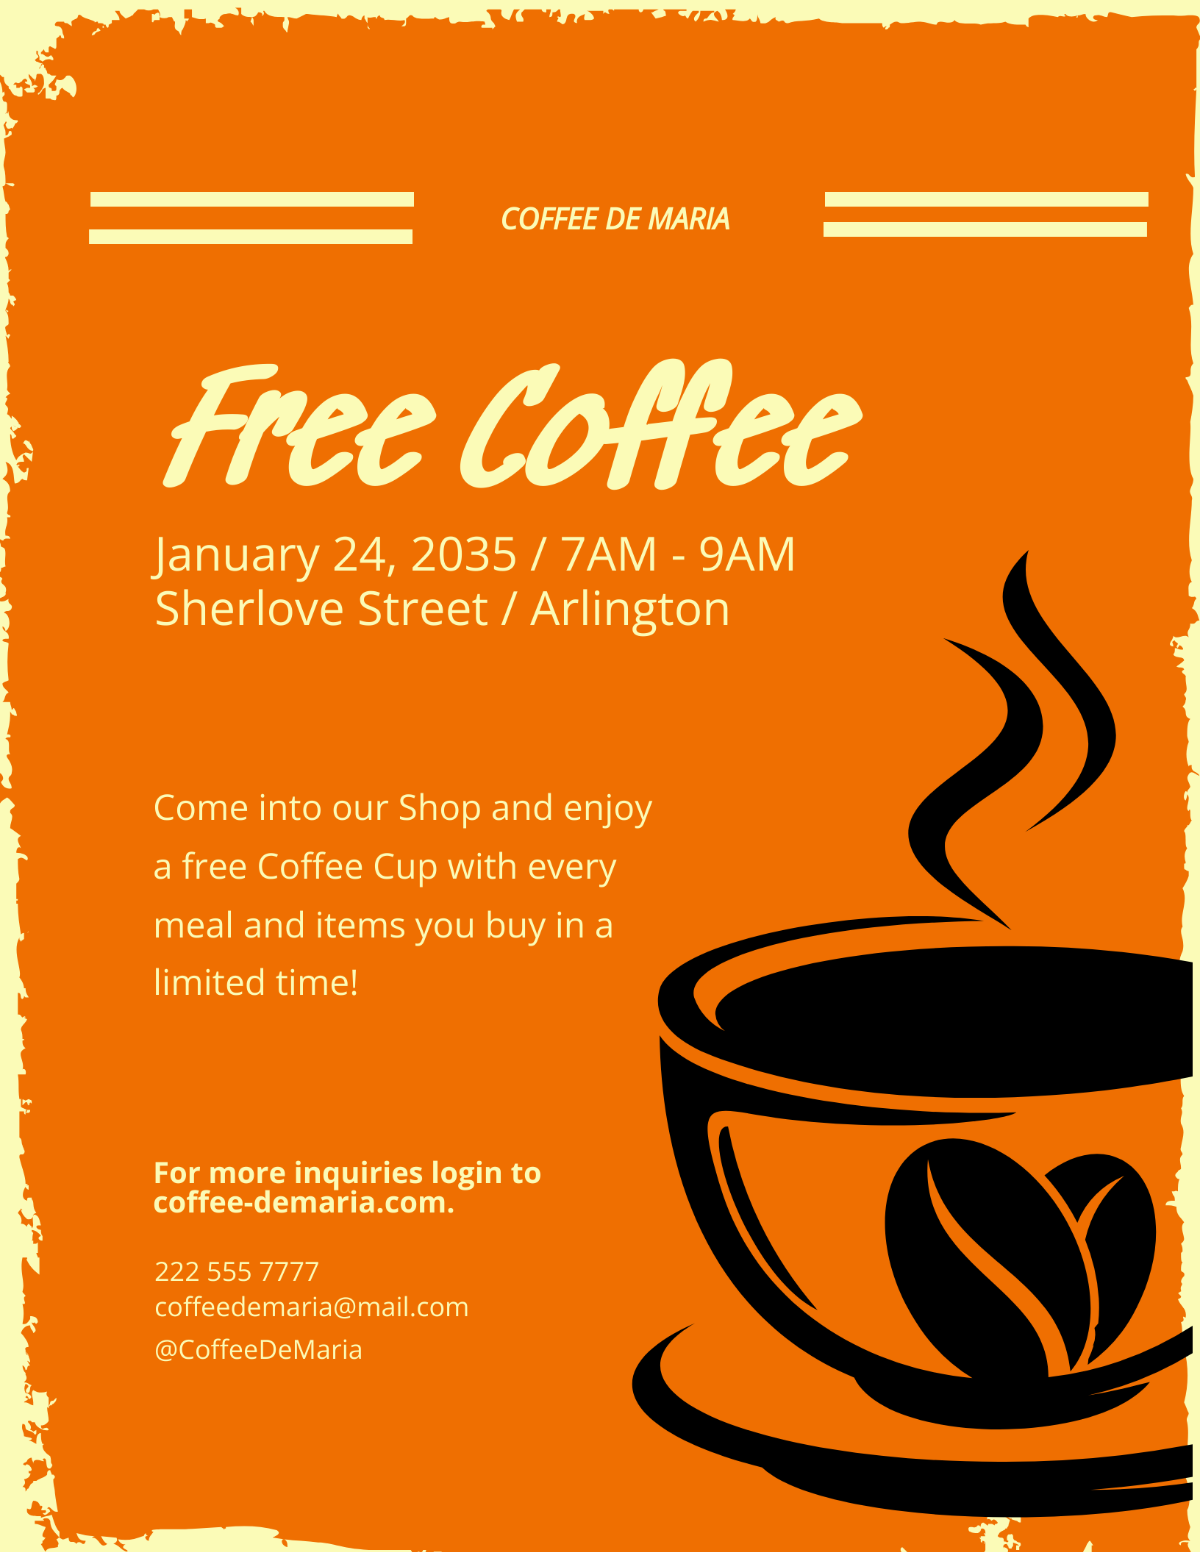 Retro CoffeeShop Flyer